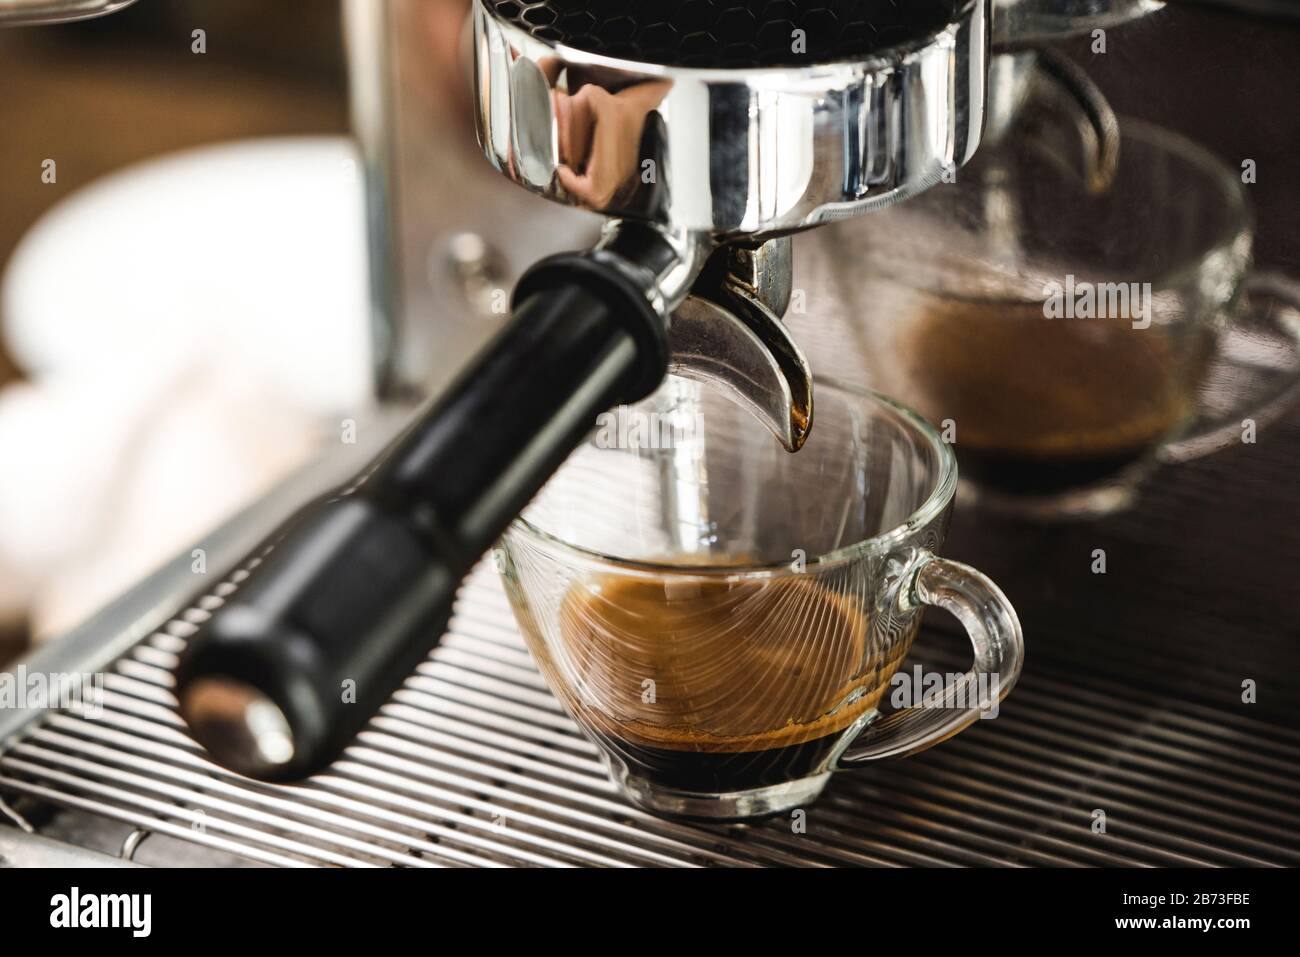 https://c8.alamy.com/comp/2B73FBE/coffee-maker-machine-brewing-espresso-shot-in-clear-glass-cup-2B73FBE.jpg